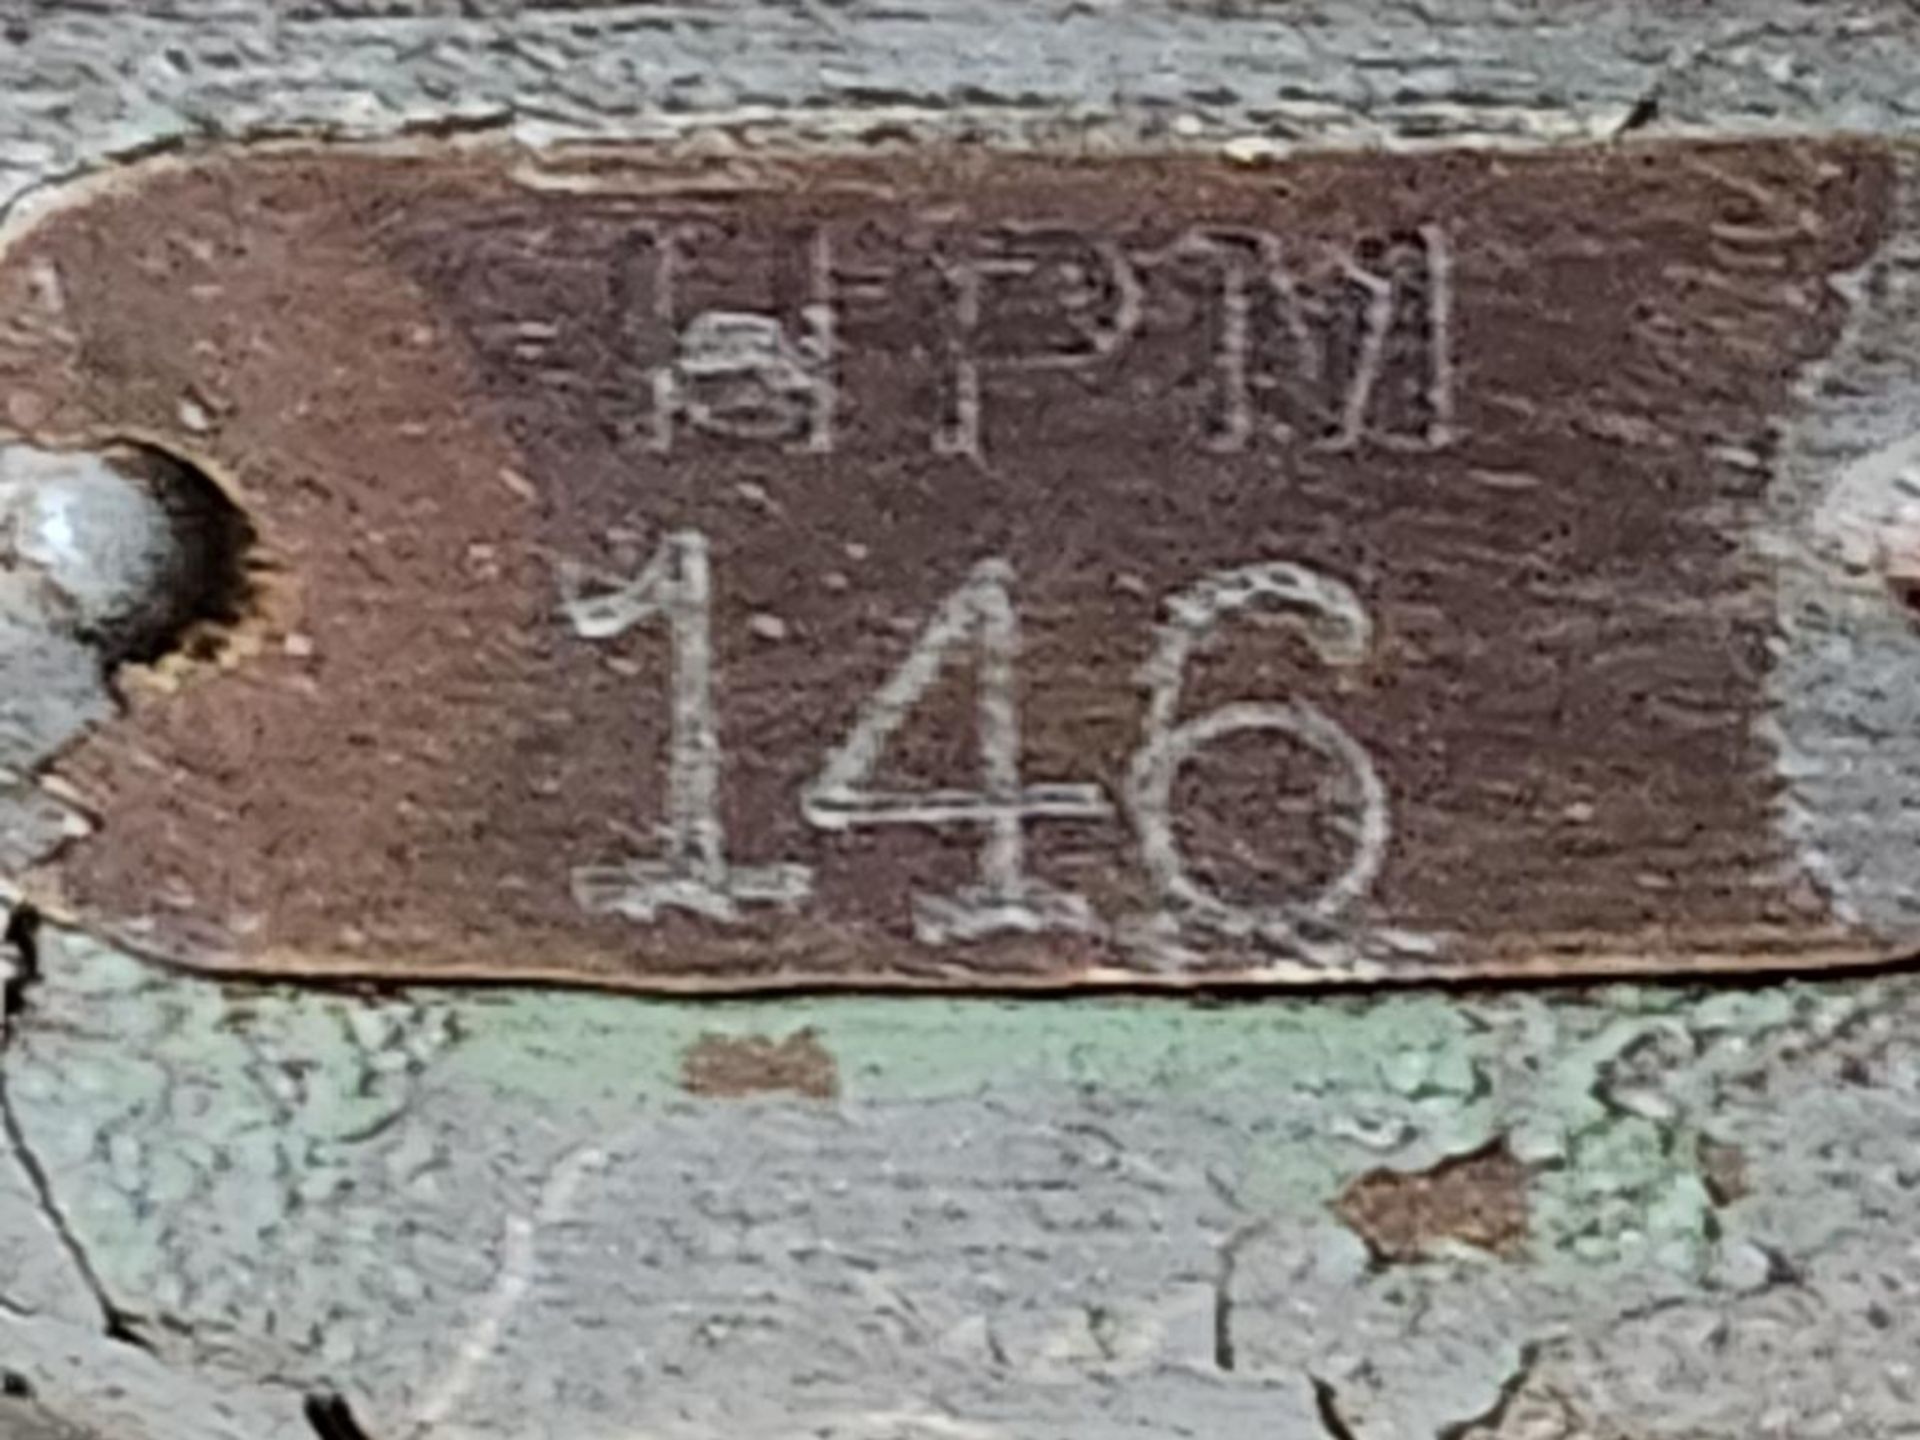 DoAll HPM 146 Dual Column Table Band Saw - Image 7 of 8